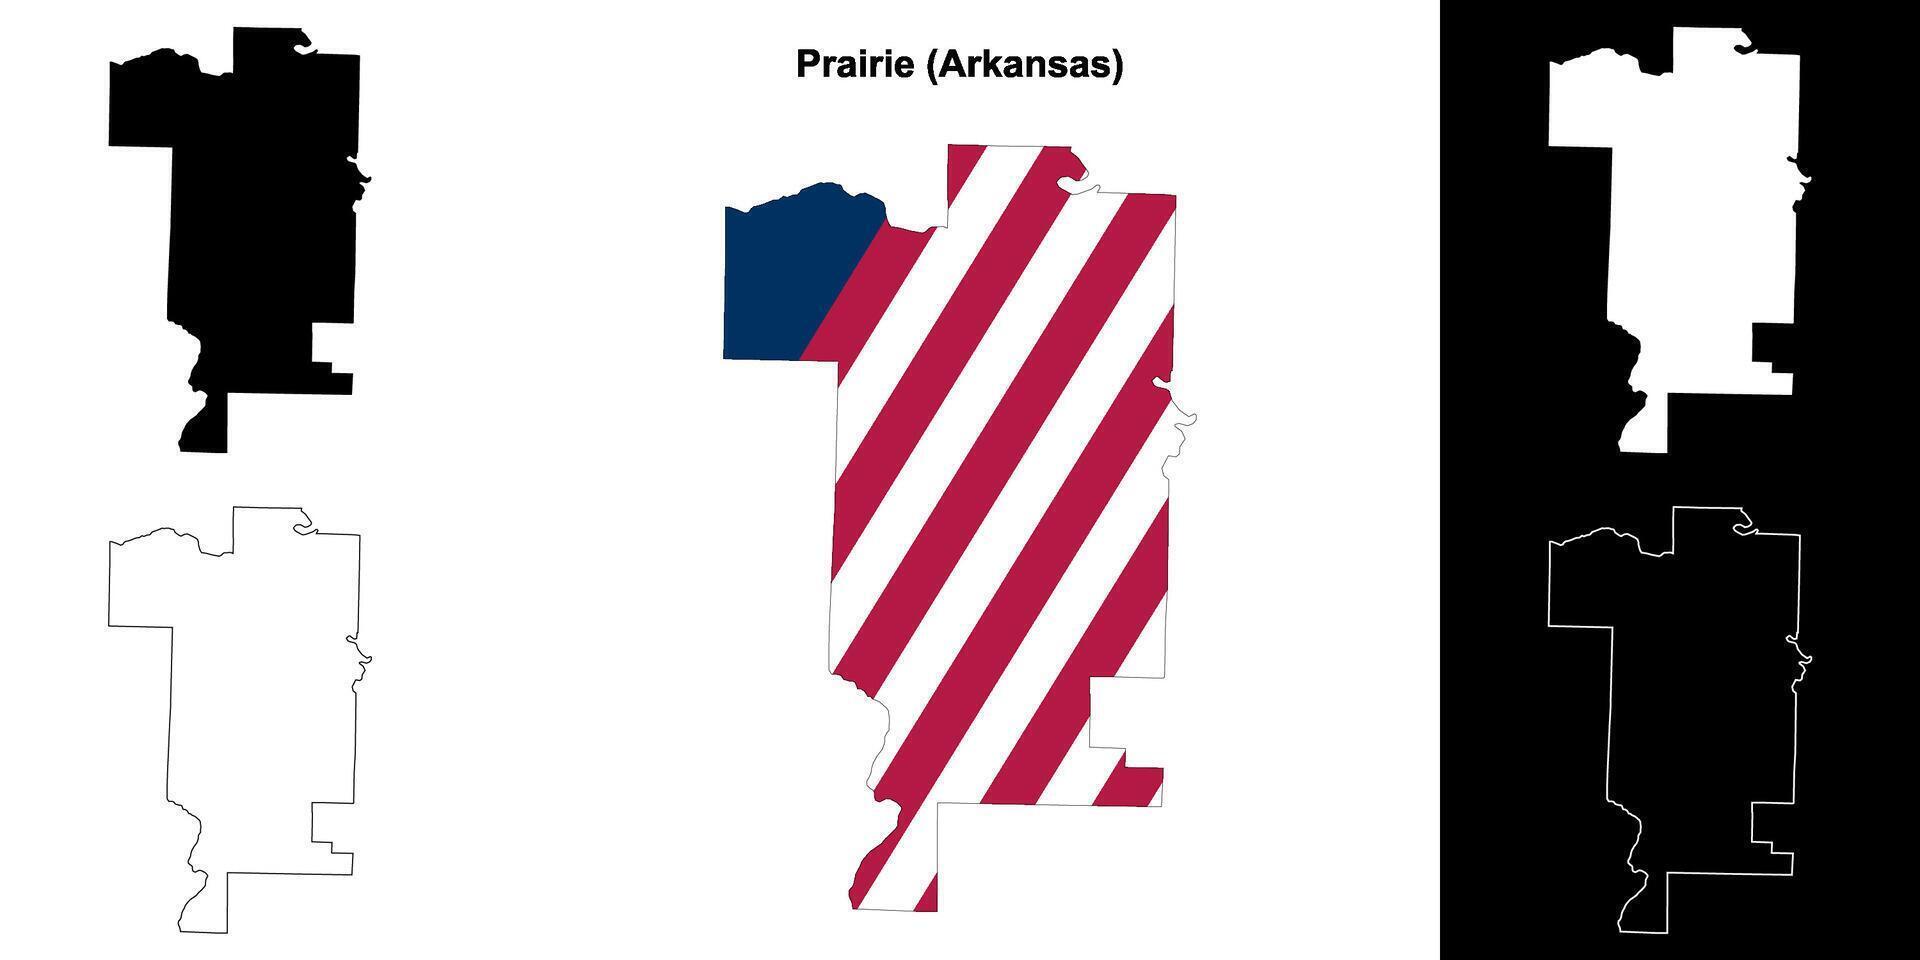 prateria contea, Arkansas schema carta geografica impostato vettore